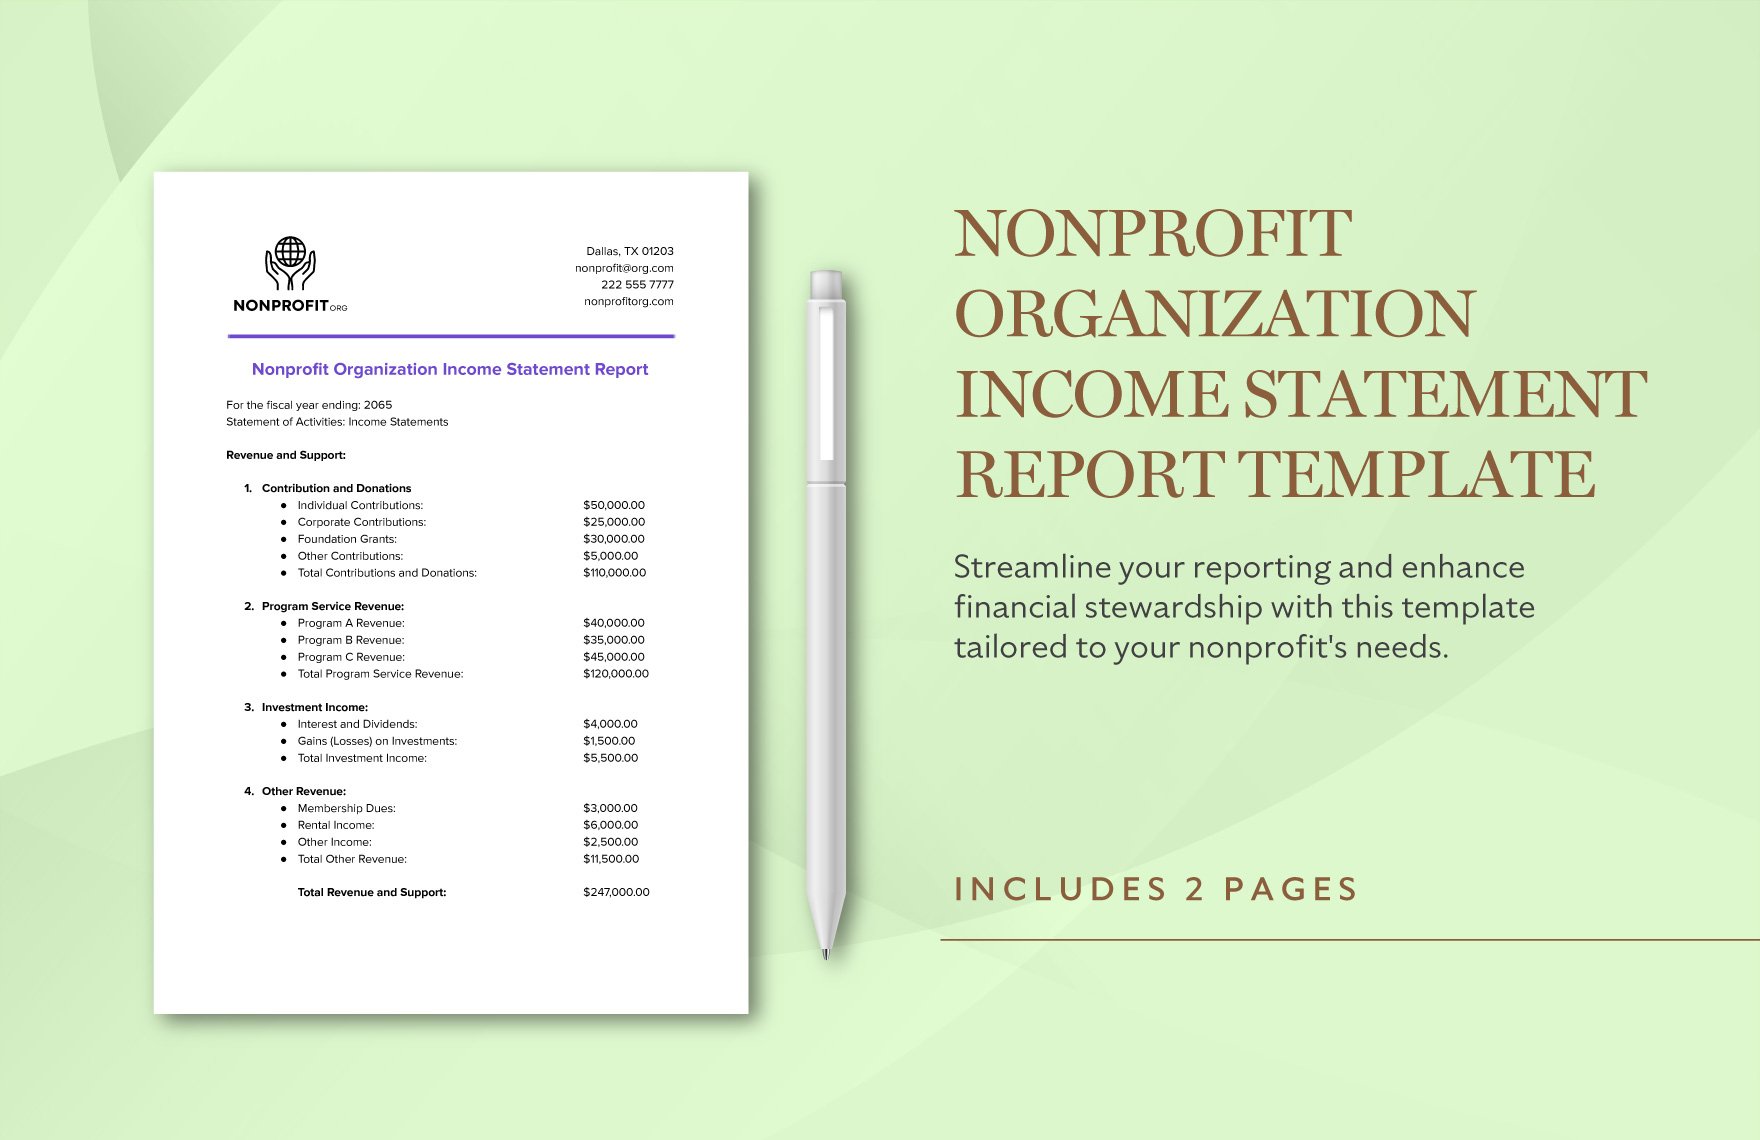 Nonprofit Organization Income Statement Report Template in Word, Google Docs, PDF